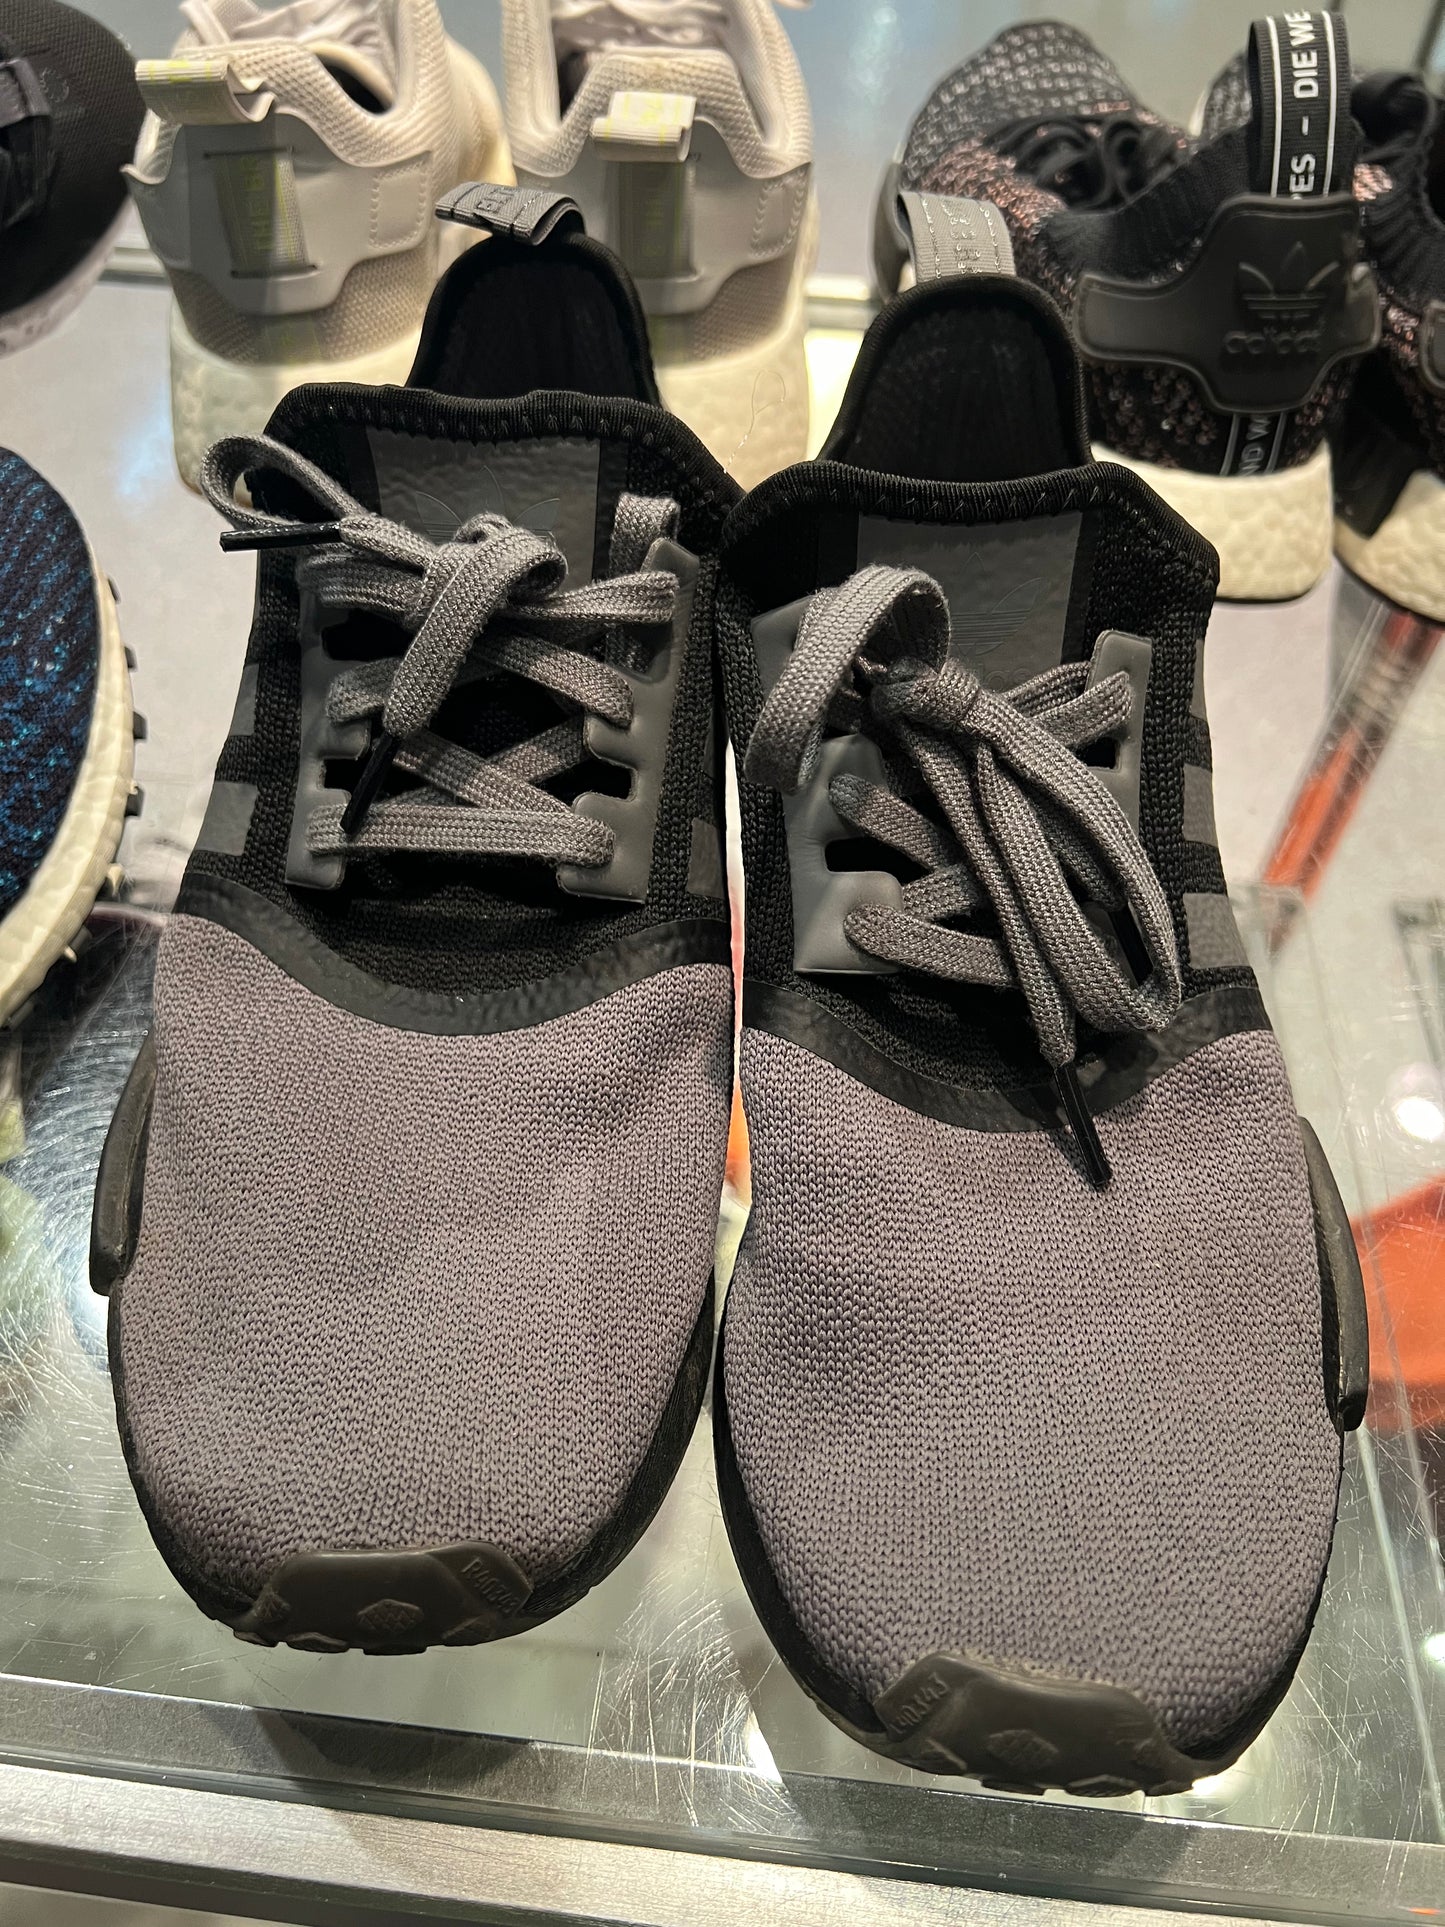 Size 9 Adidas NMD “Grey Black” (Mall)